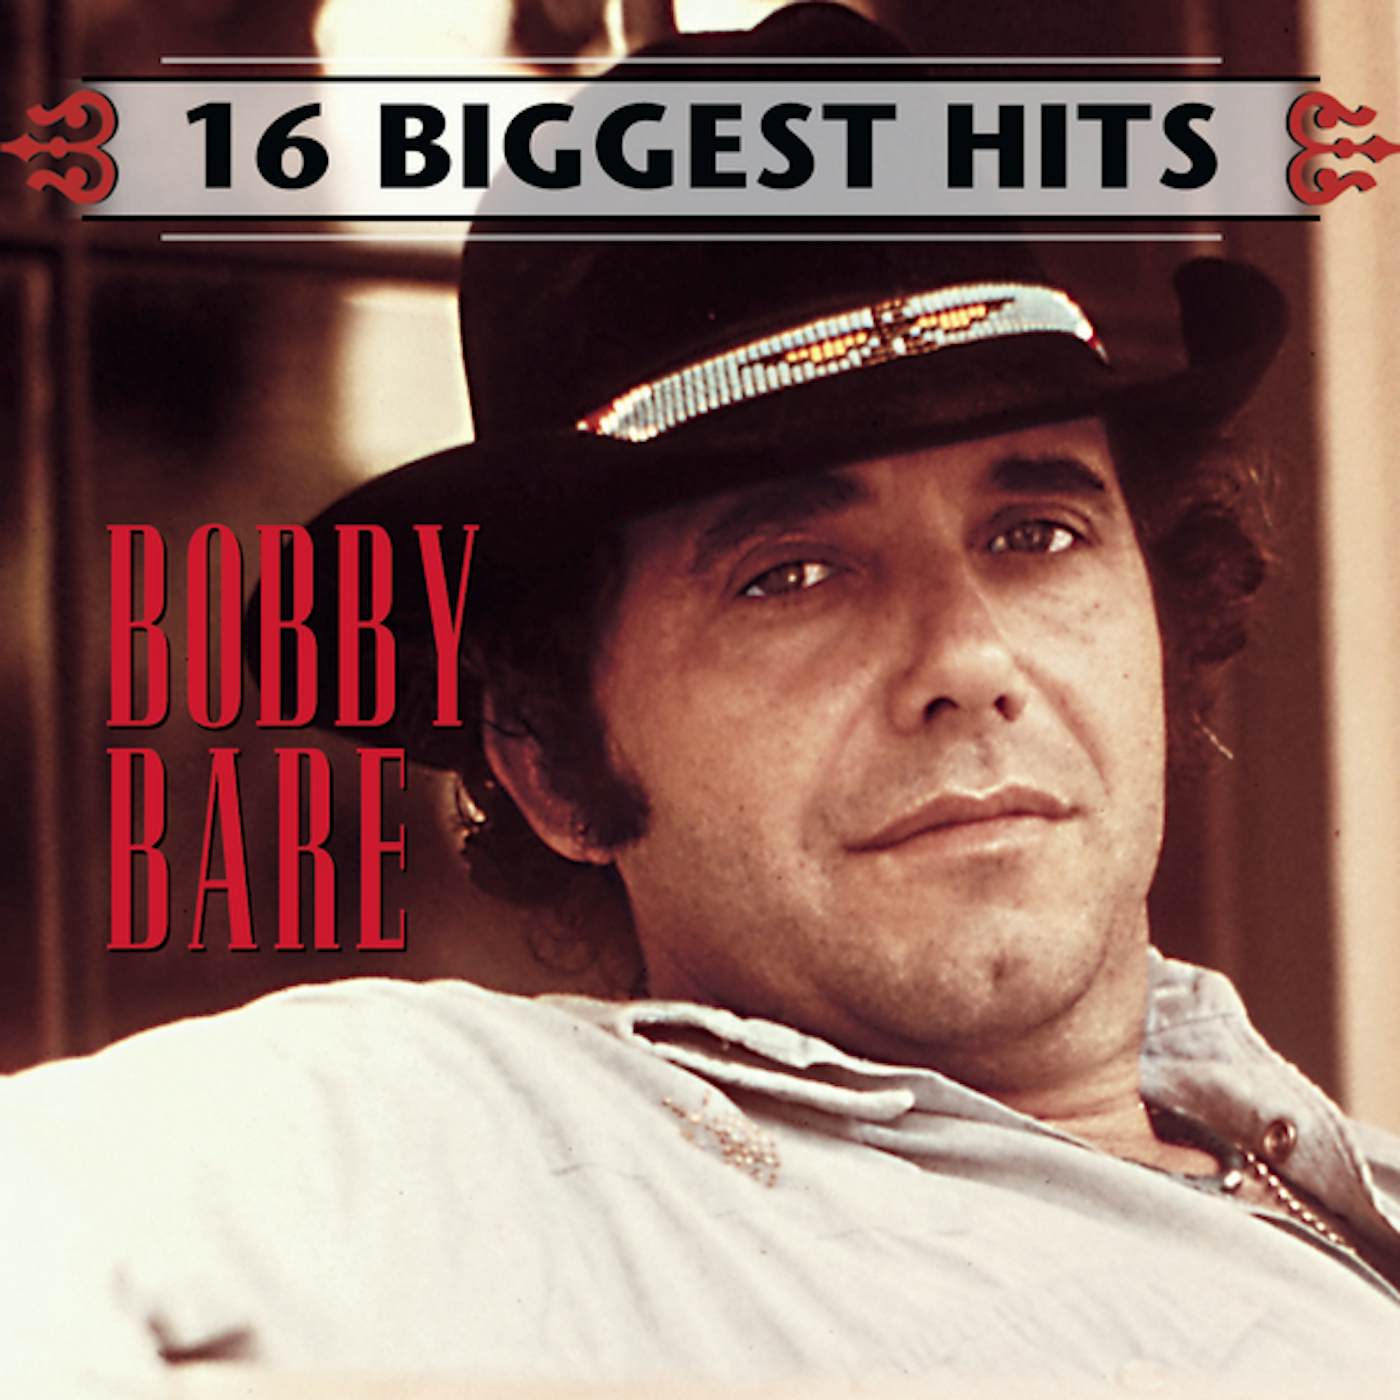 Bobby Bare 16 BIGGEST HITS CD